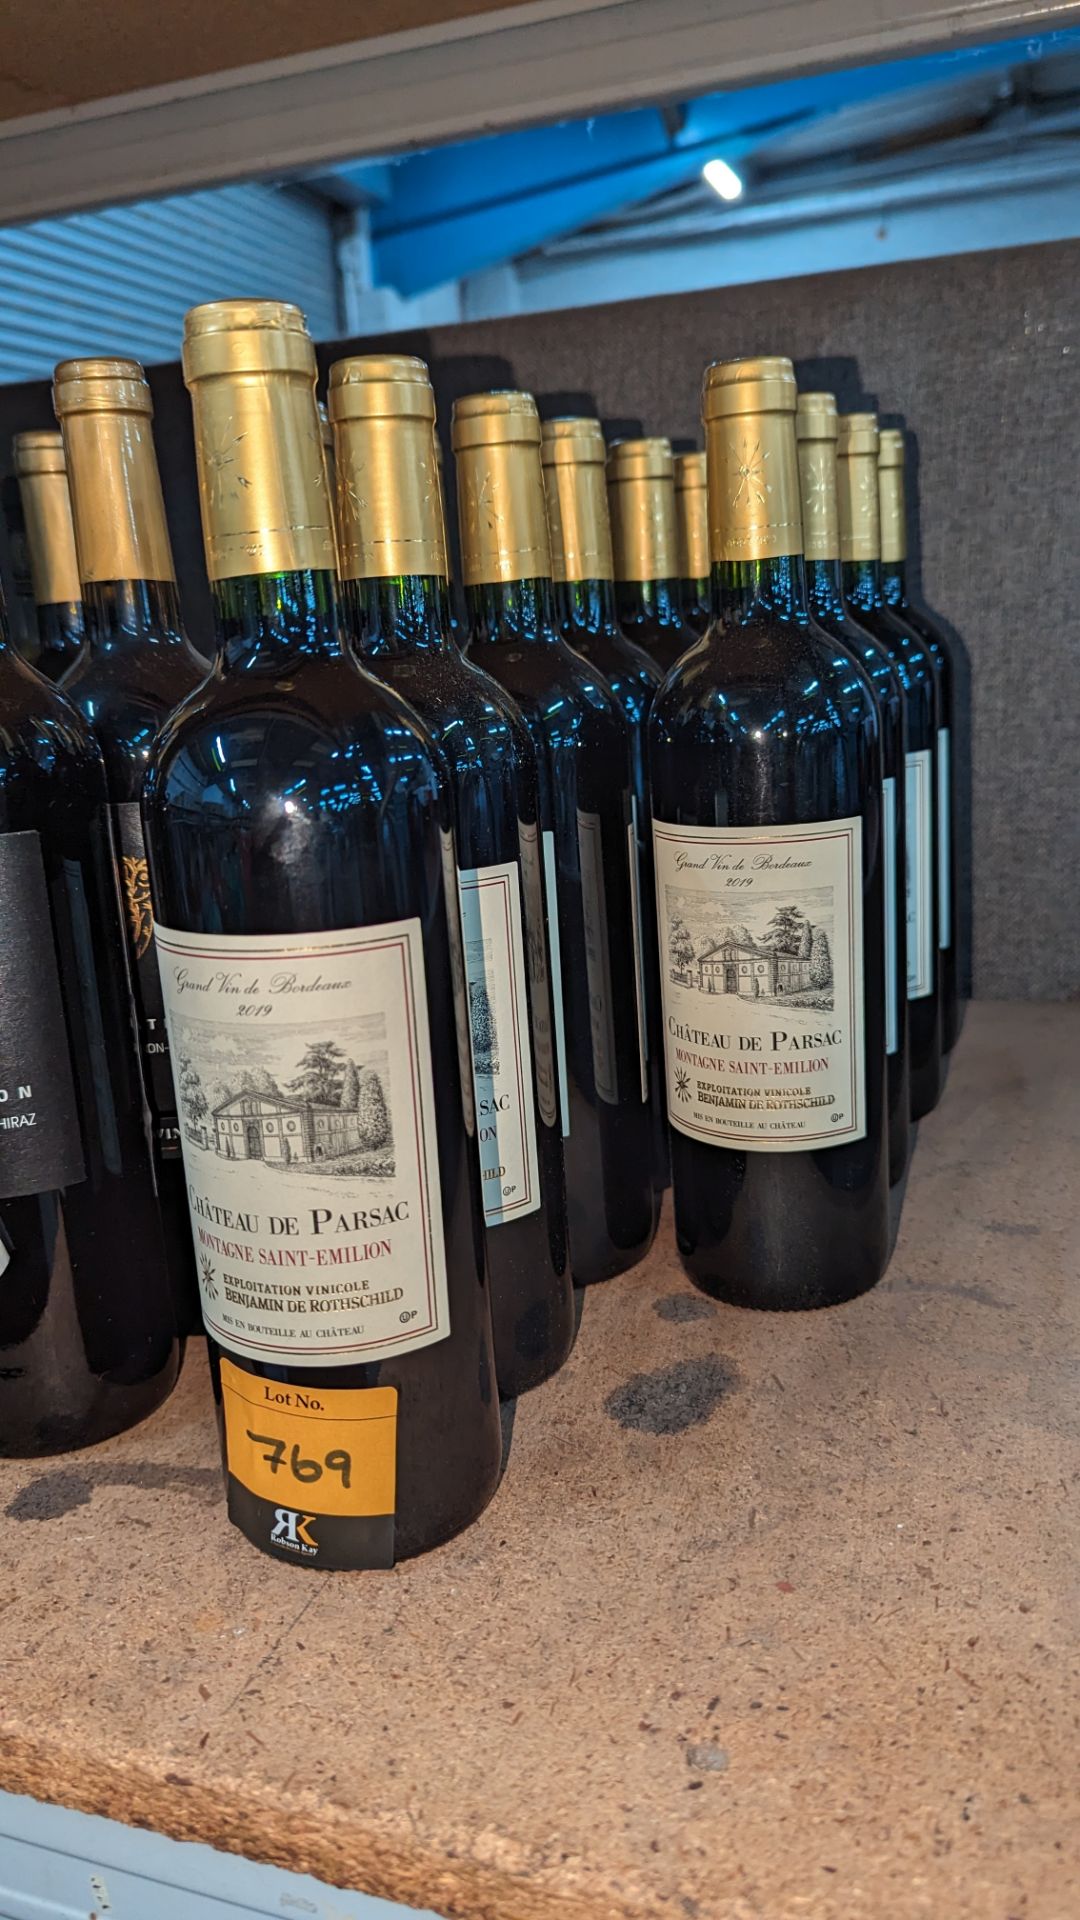 10 bottles of 2019 Chateau De Parsac Montagne Saint-Emilion French (Bordeaux) red wine sold under AW - Image 3 of 4